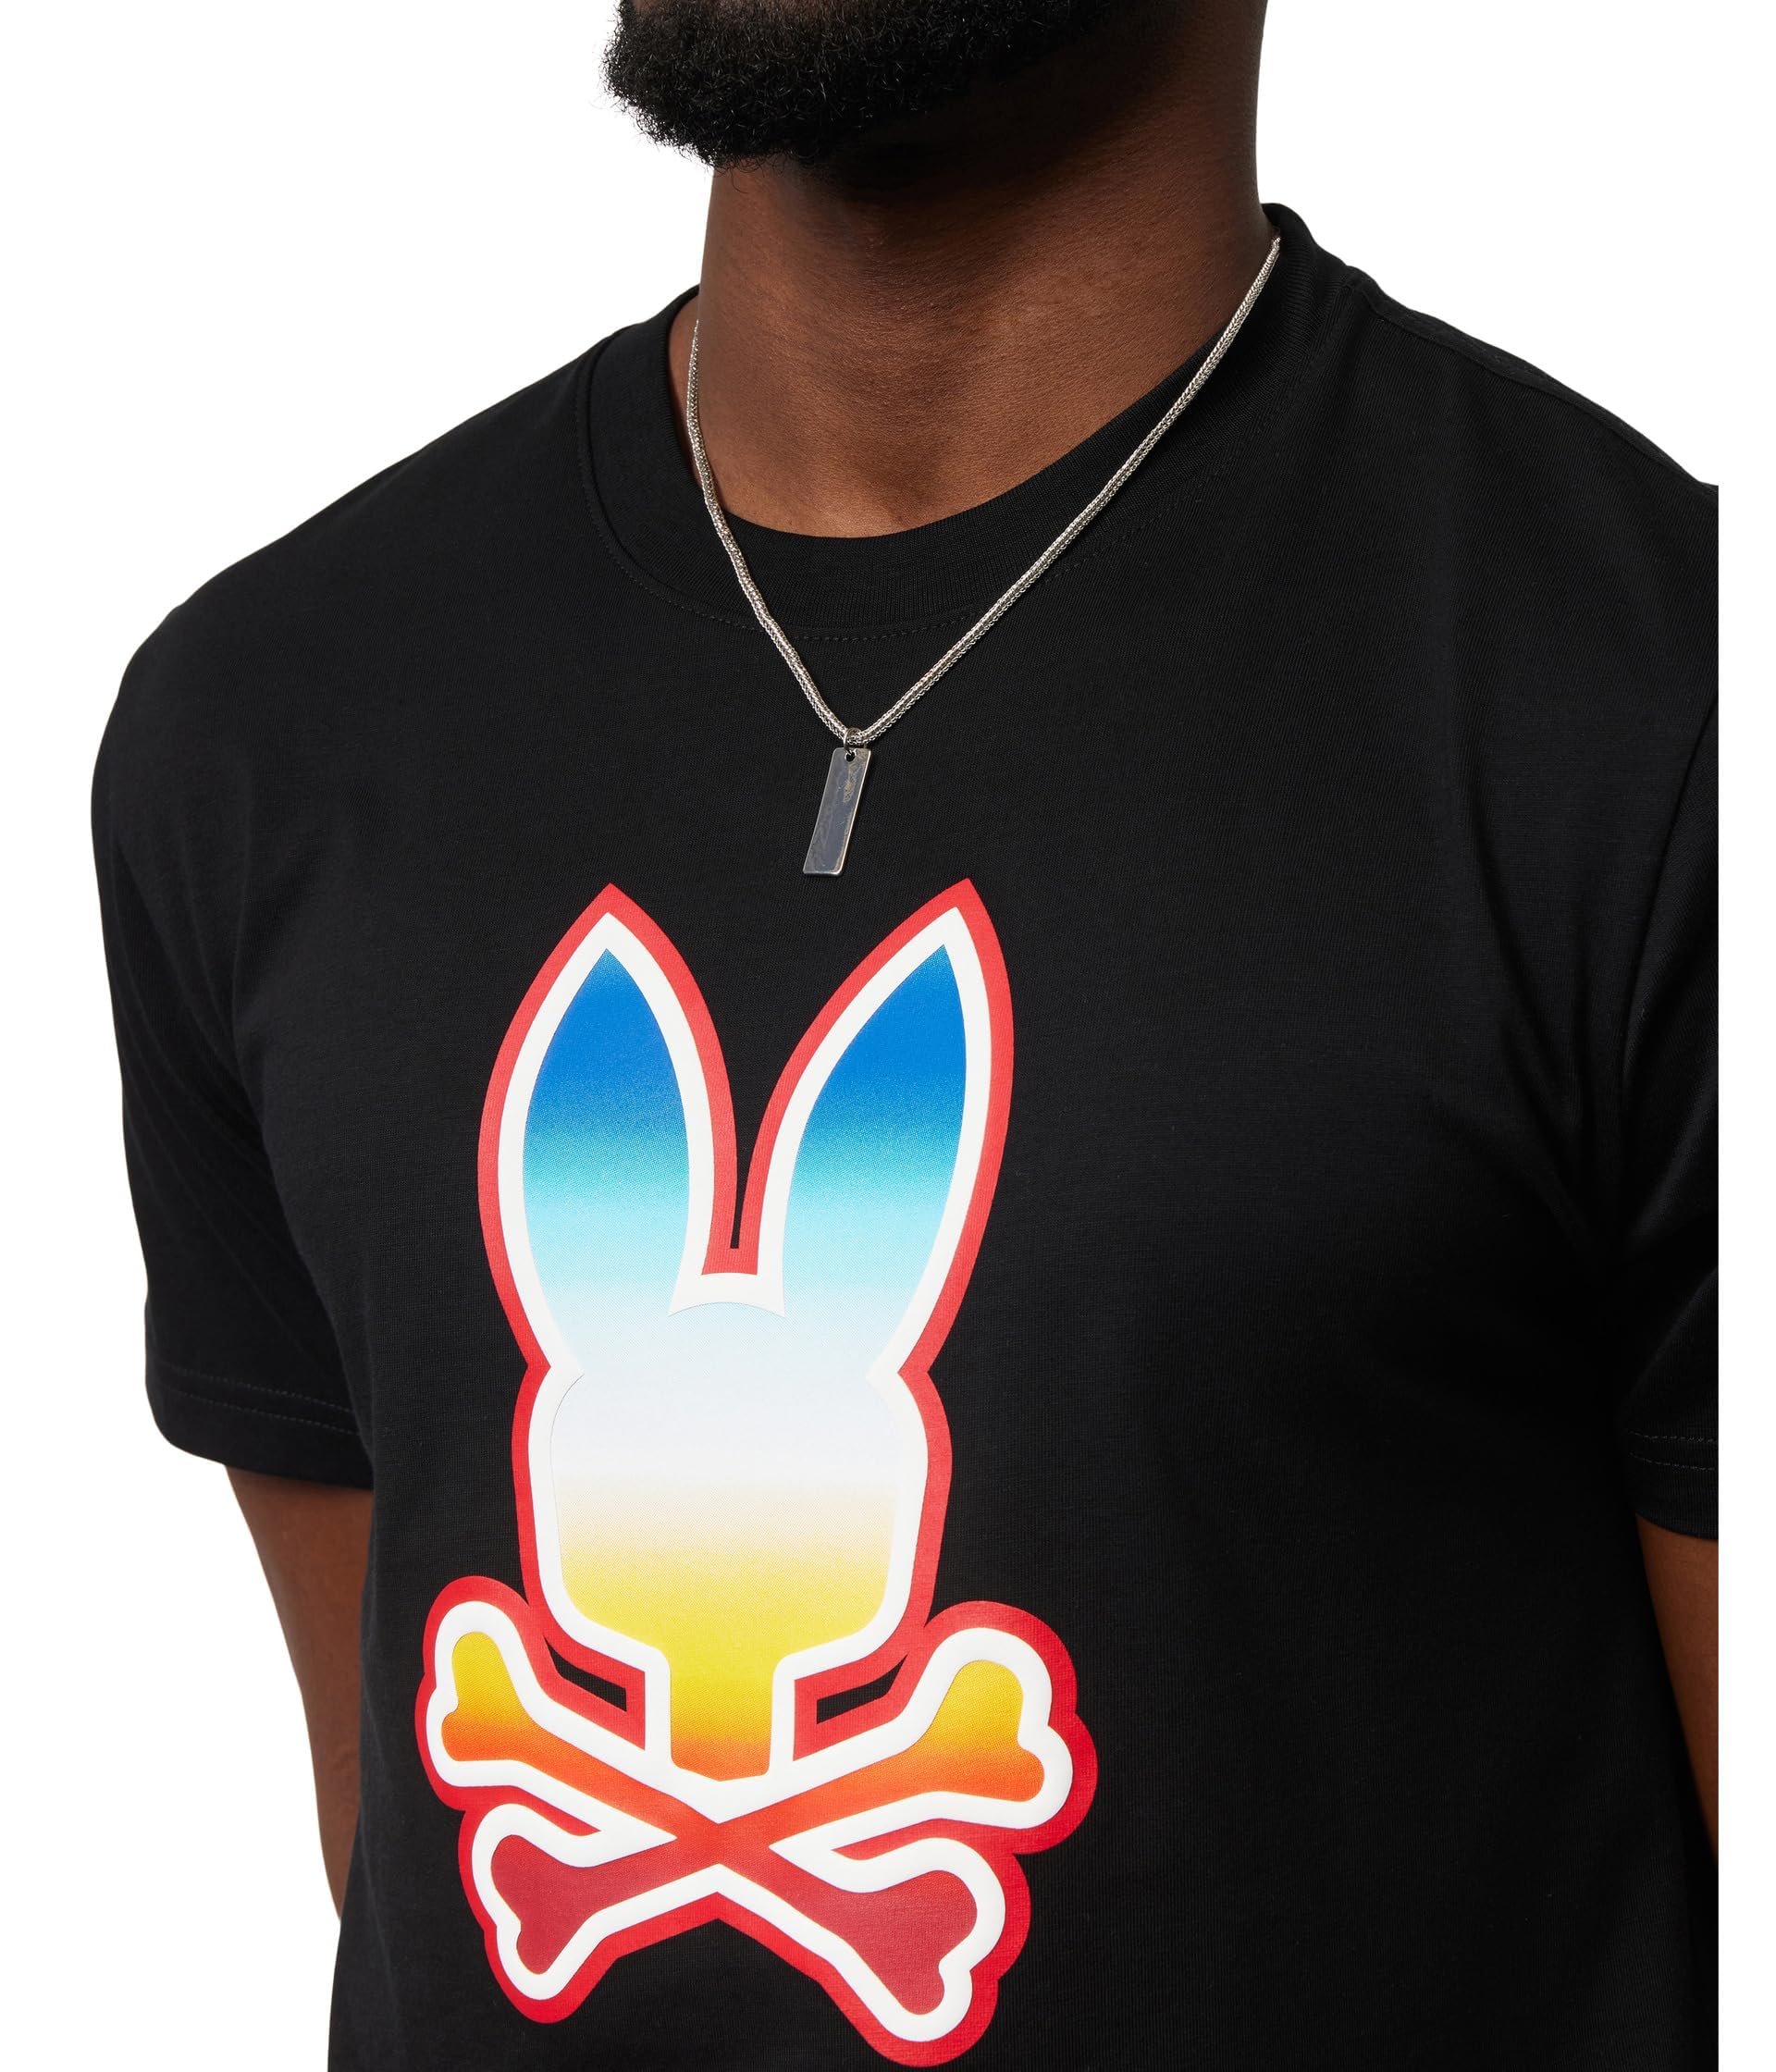 Psycho Bunny Guy Graphic Tee Black SM (US Men's 4)